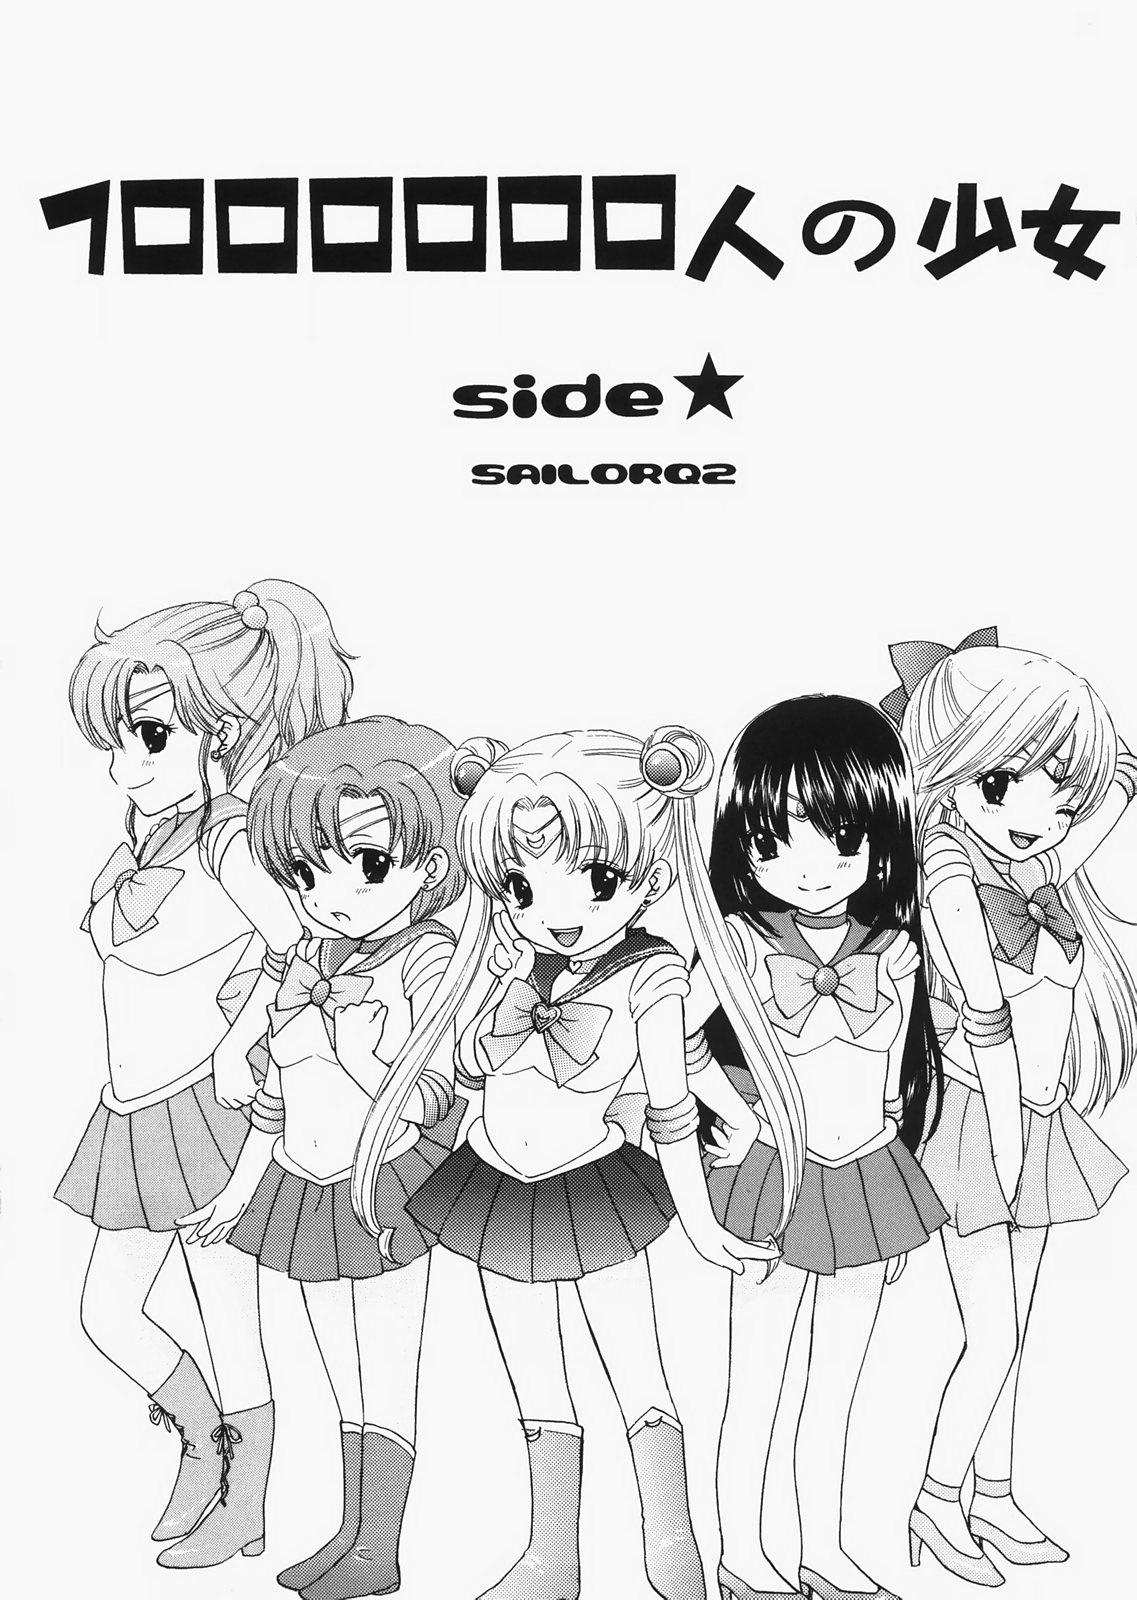 Car 1000000-nin no Shoujo side star - Sailor moon Chunky - Page 4